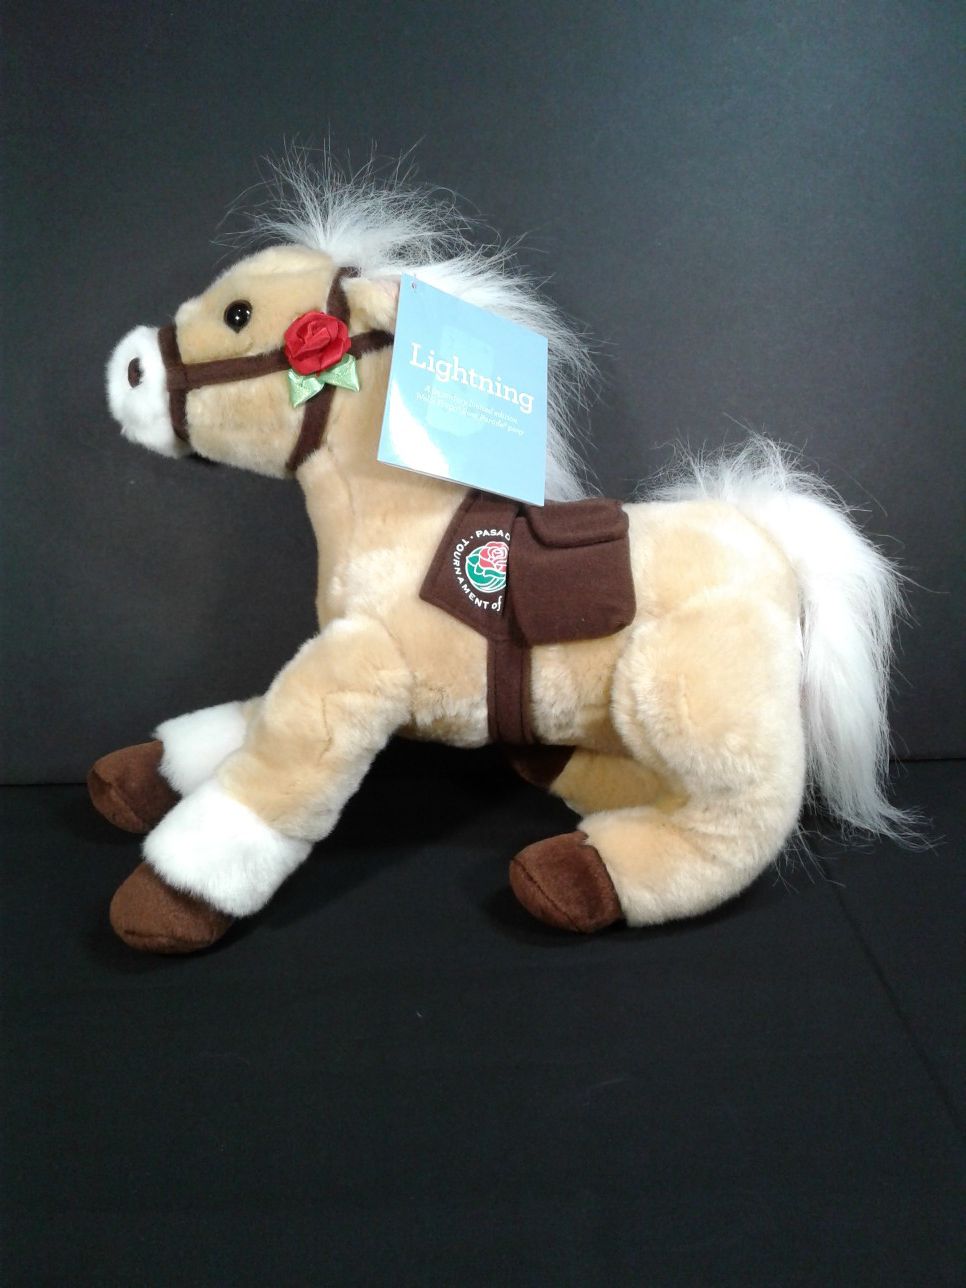 Wells Fargo 2010 Legendary Pony Lightning Stuffed Animal